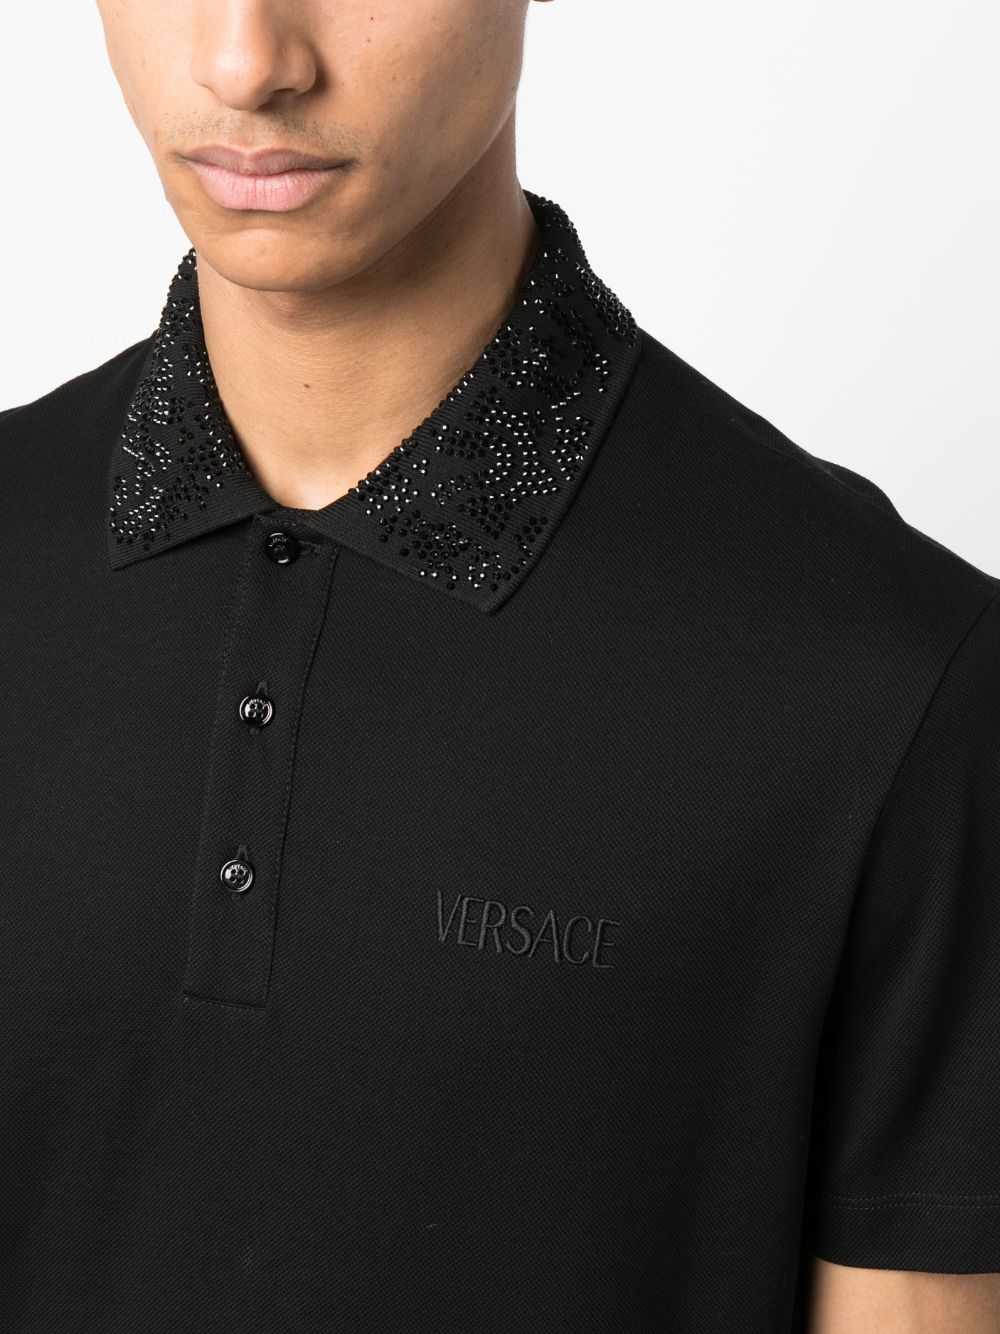 Versace Black Crystal Collar Polo